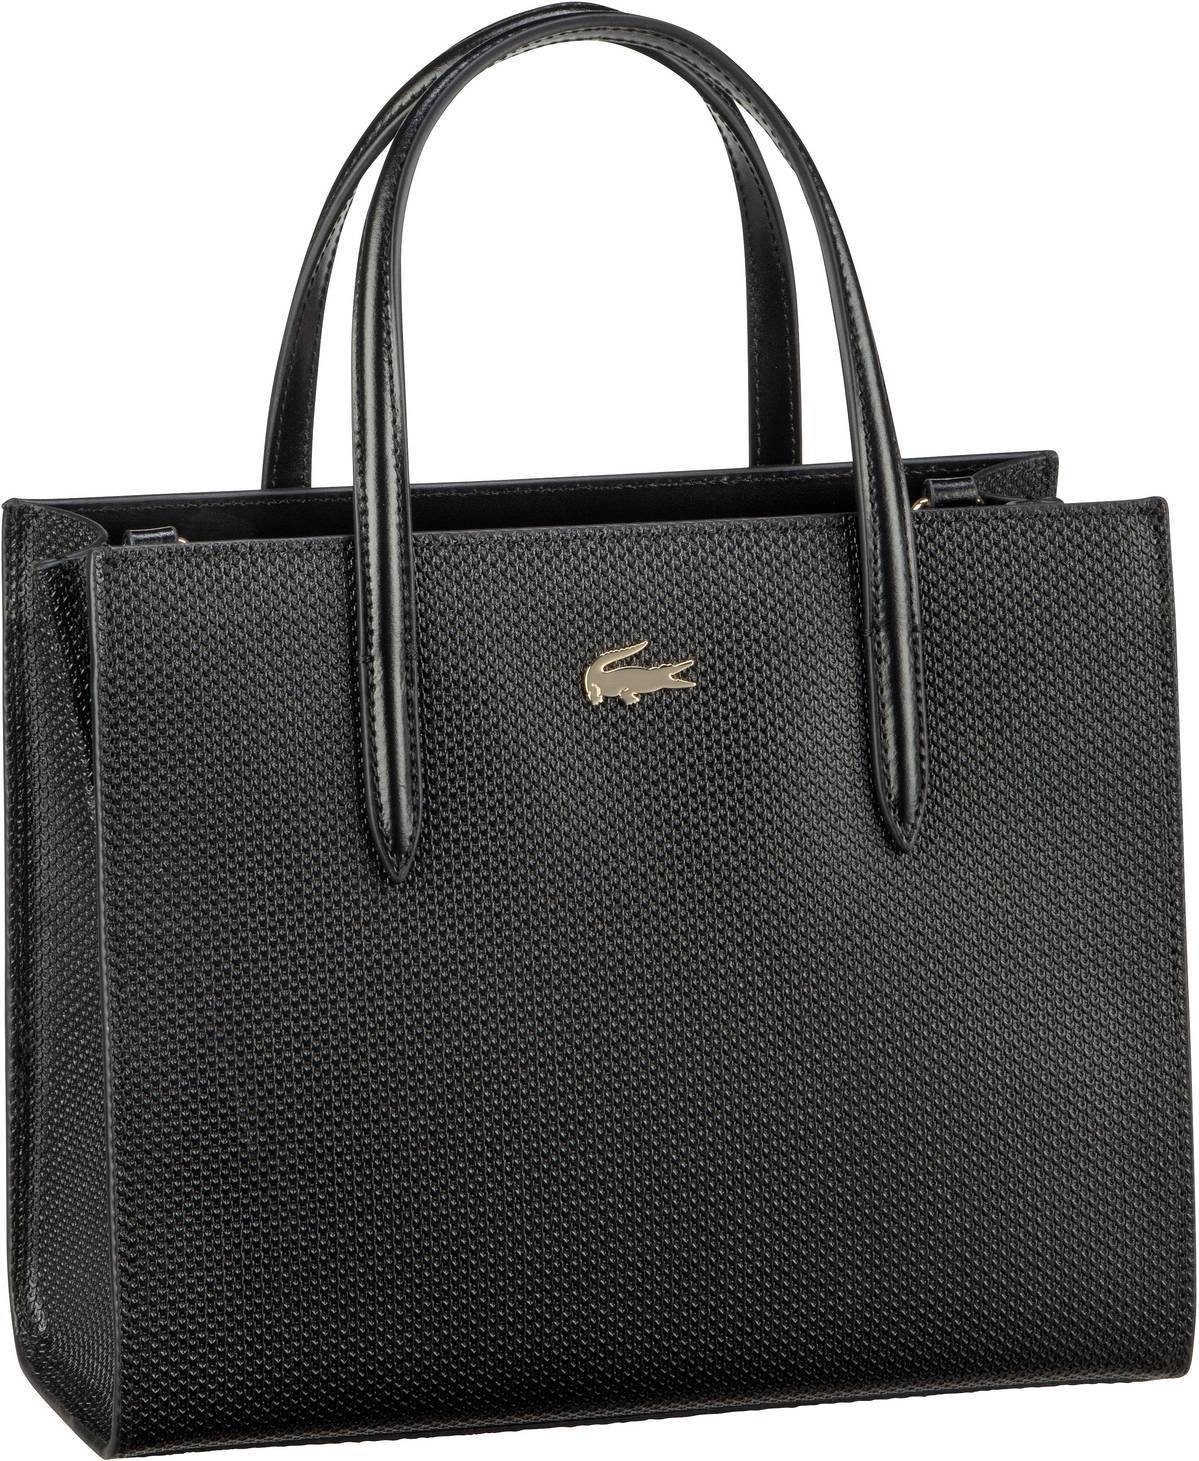 Lacoste Handtasche »Chantaco Tote Bag 2562« kaufen | OTTO